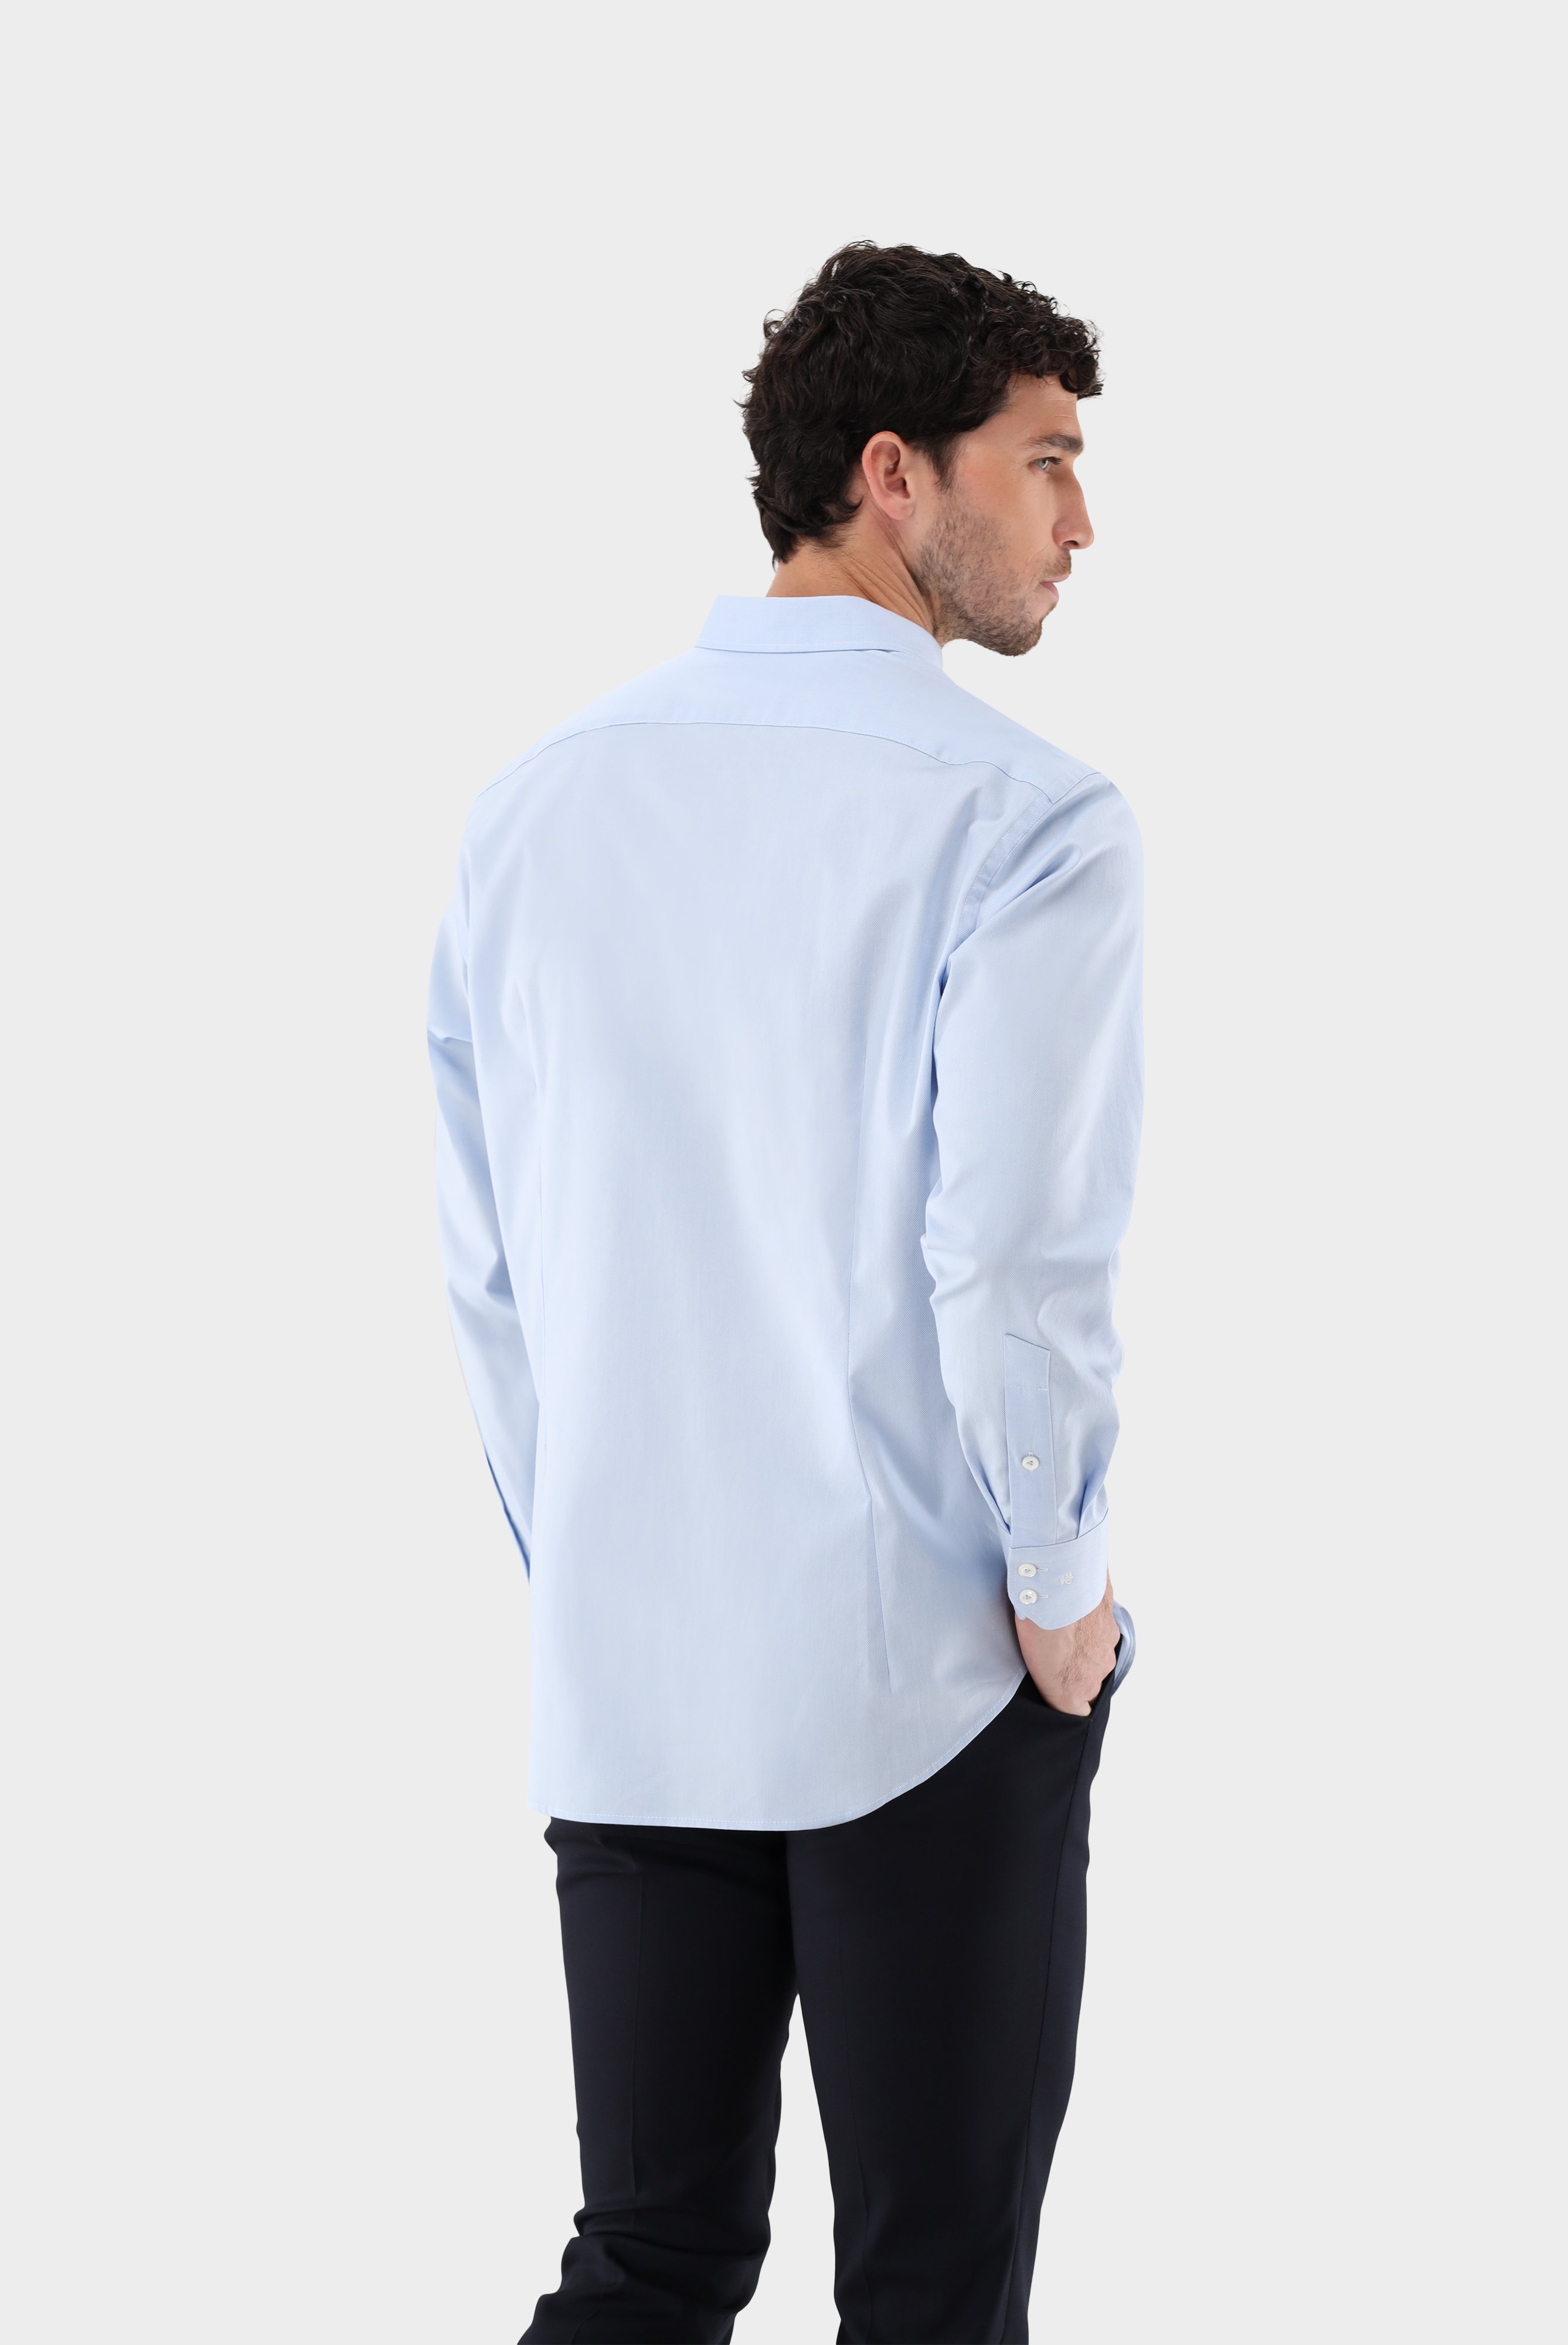 Casual Hemden+Button-Down Hemd mit Kontrastband Tailor Fit+20.2013.C5.150272.720.38